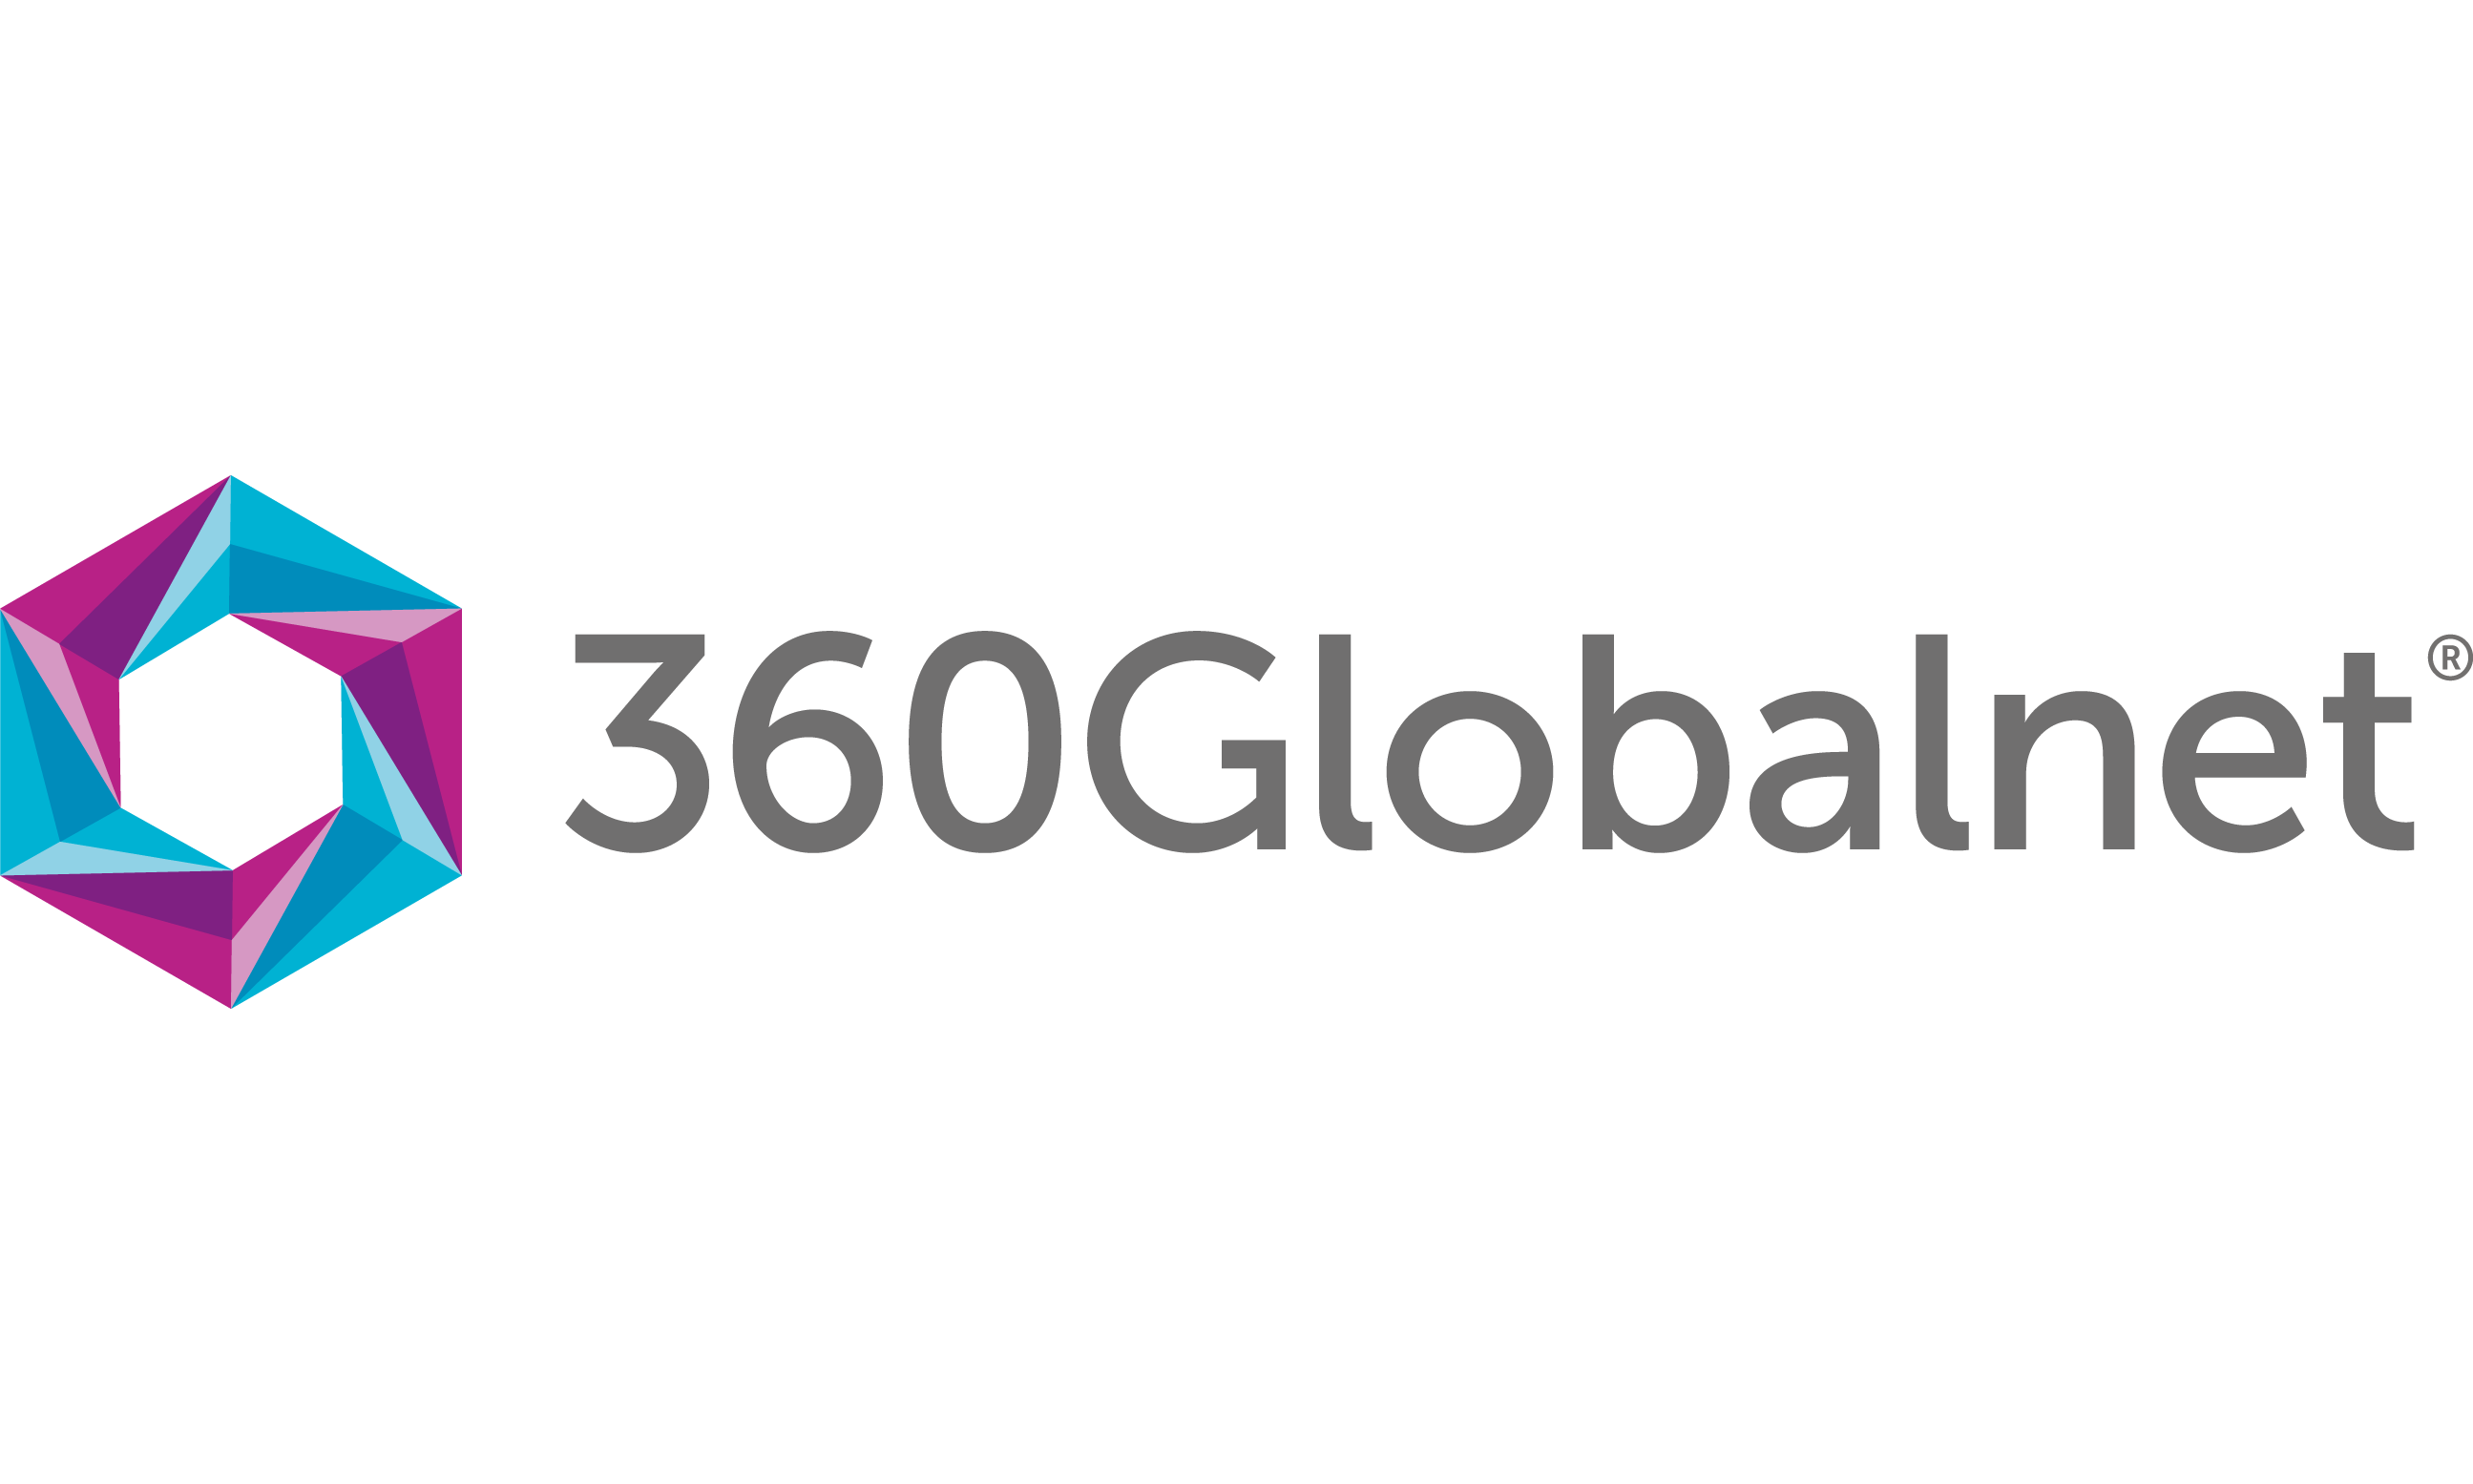 360Globalnet